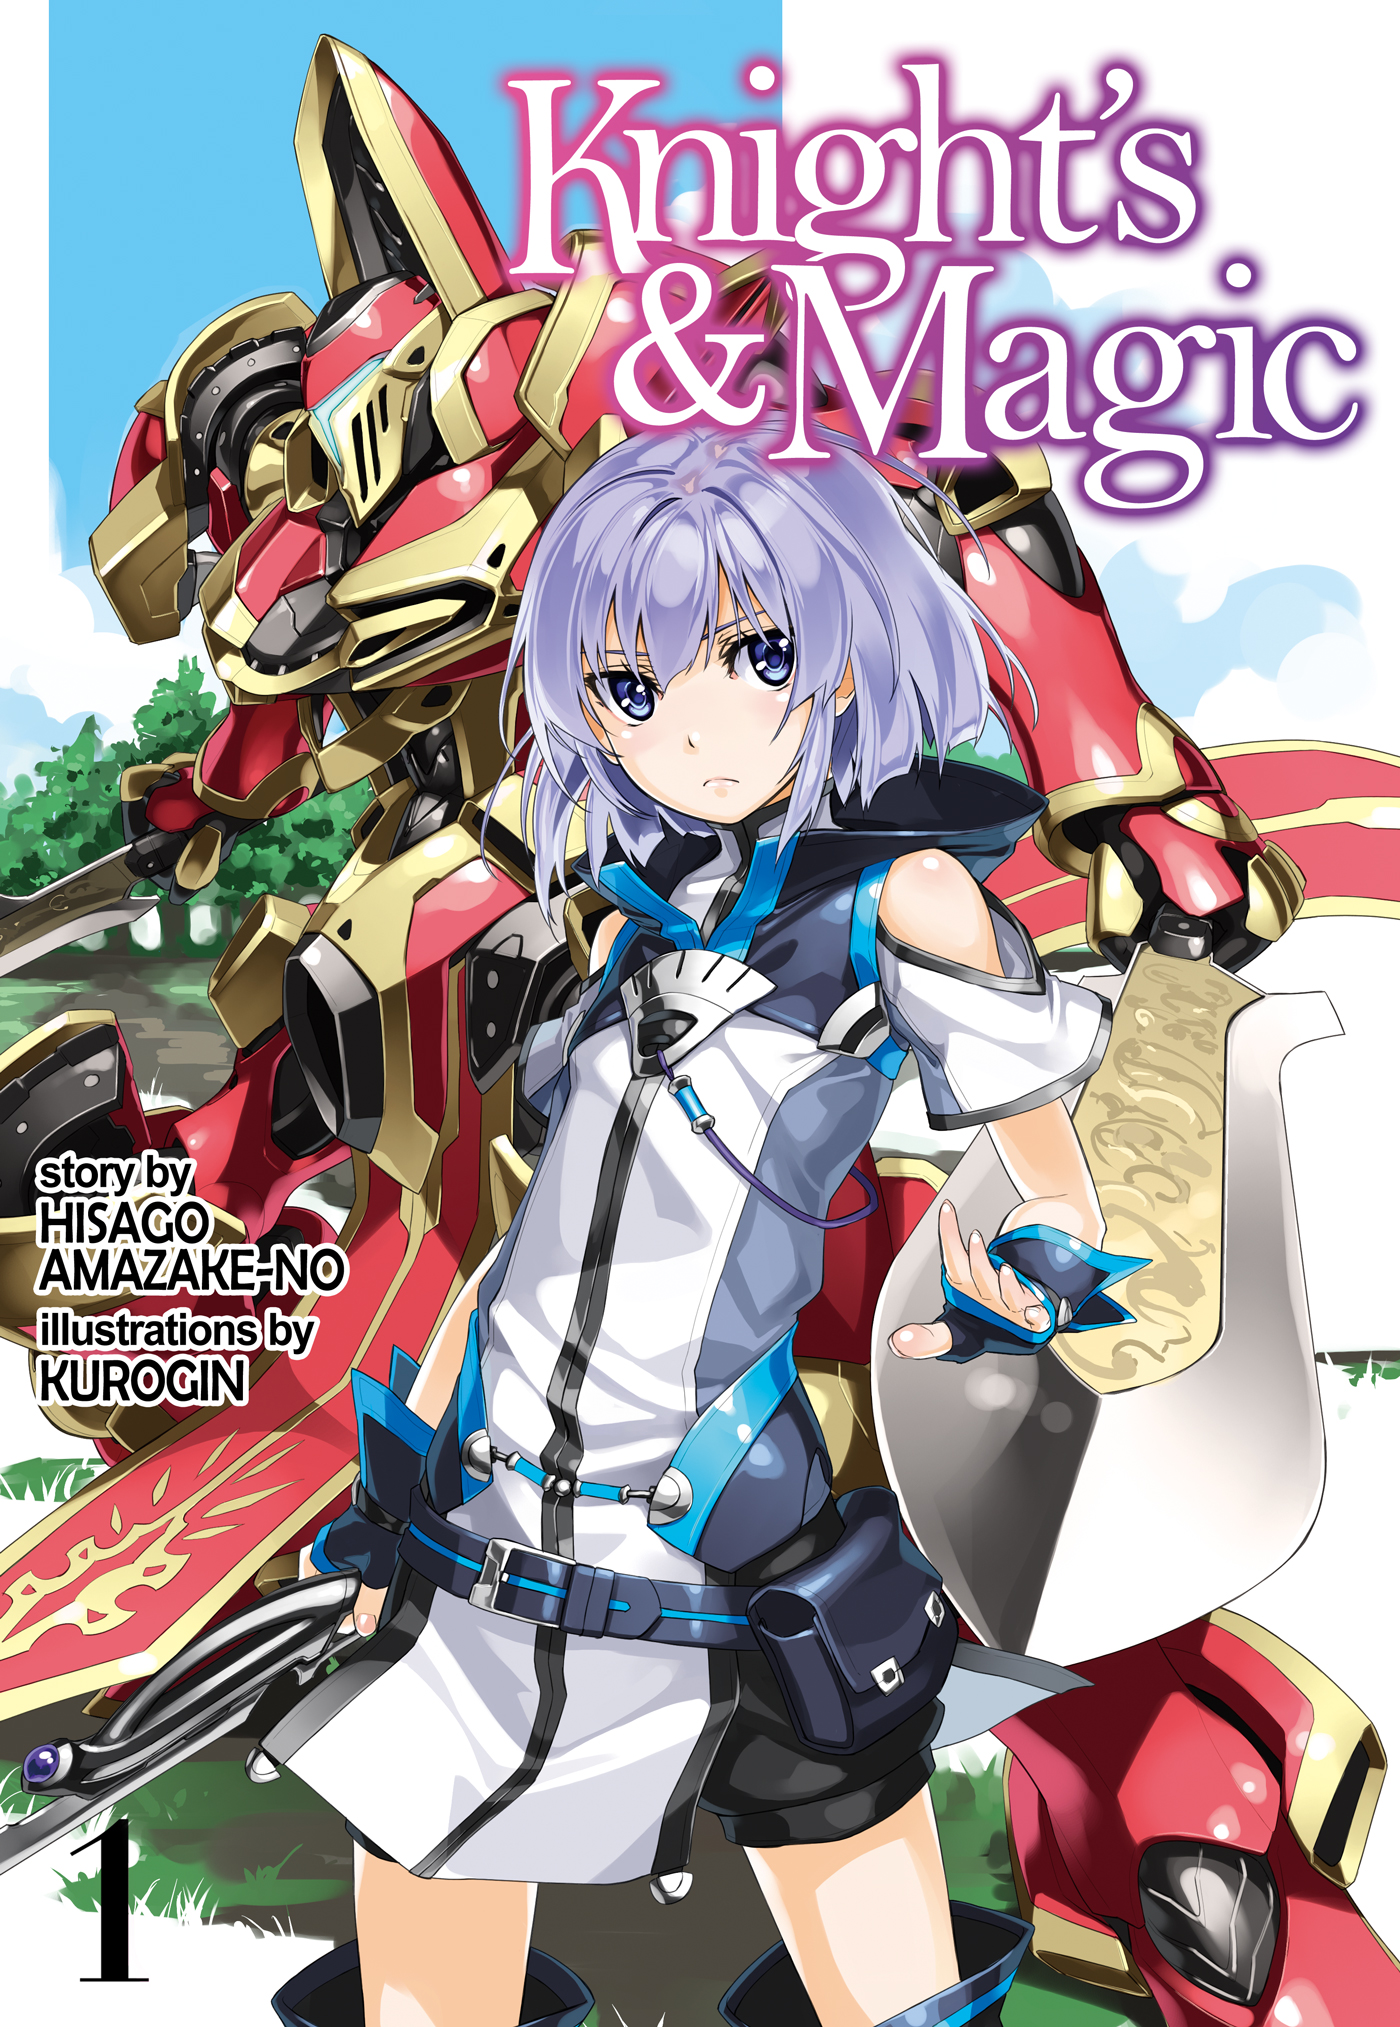 Knight’s & Magic by Hisago Amazake-no (Story), Kurogi (Illustrations)